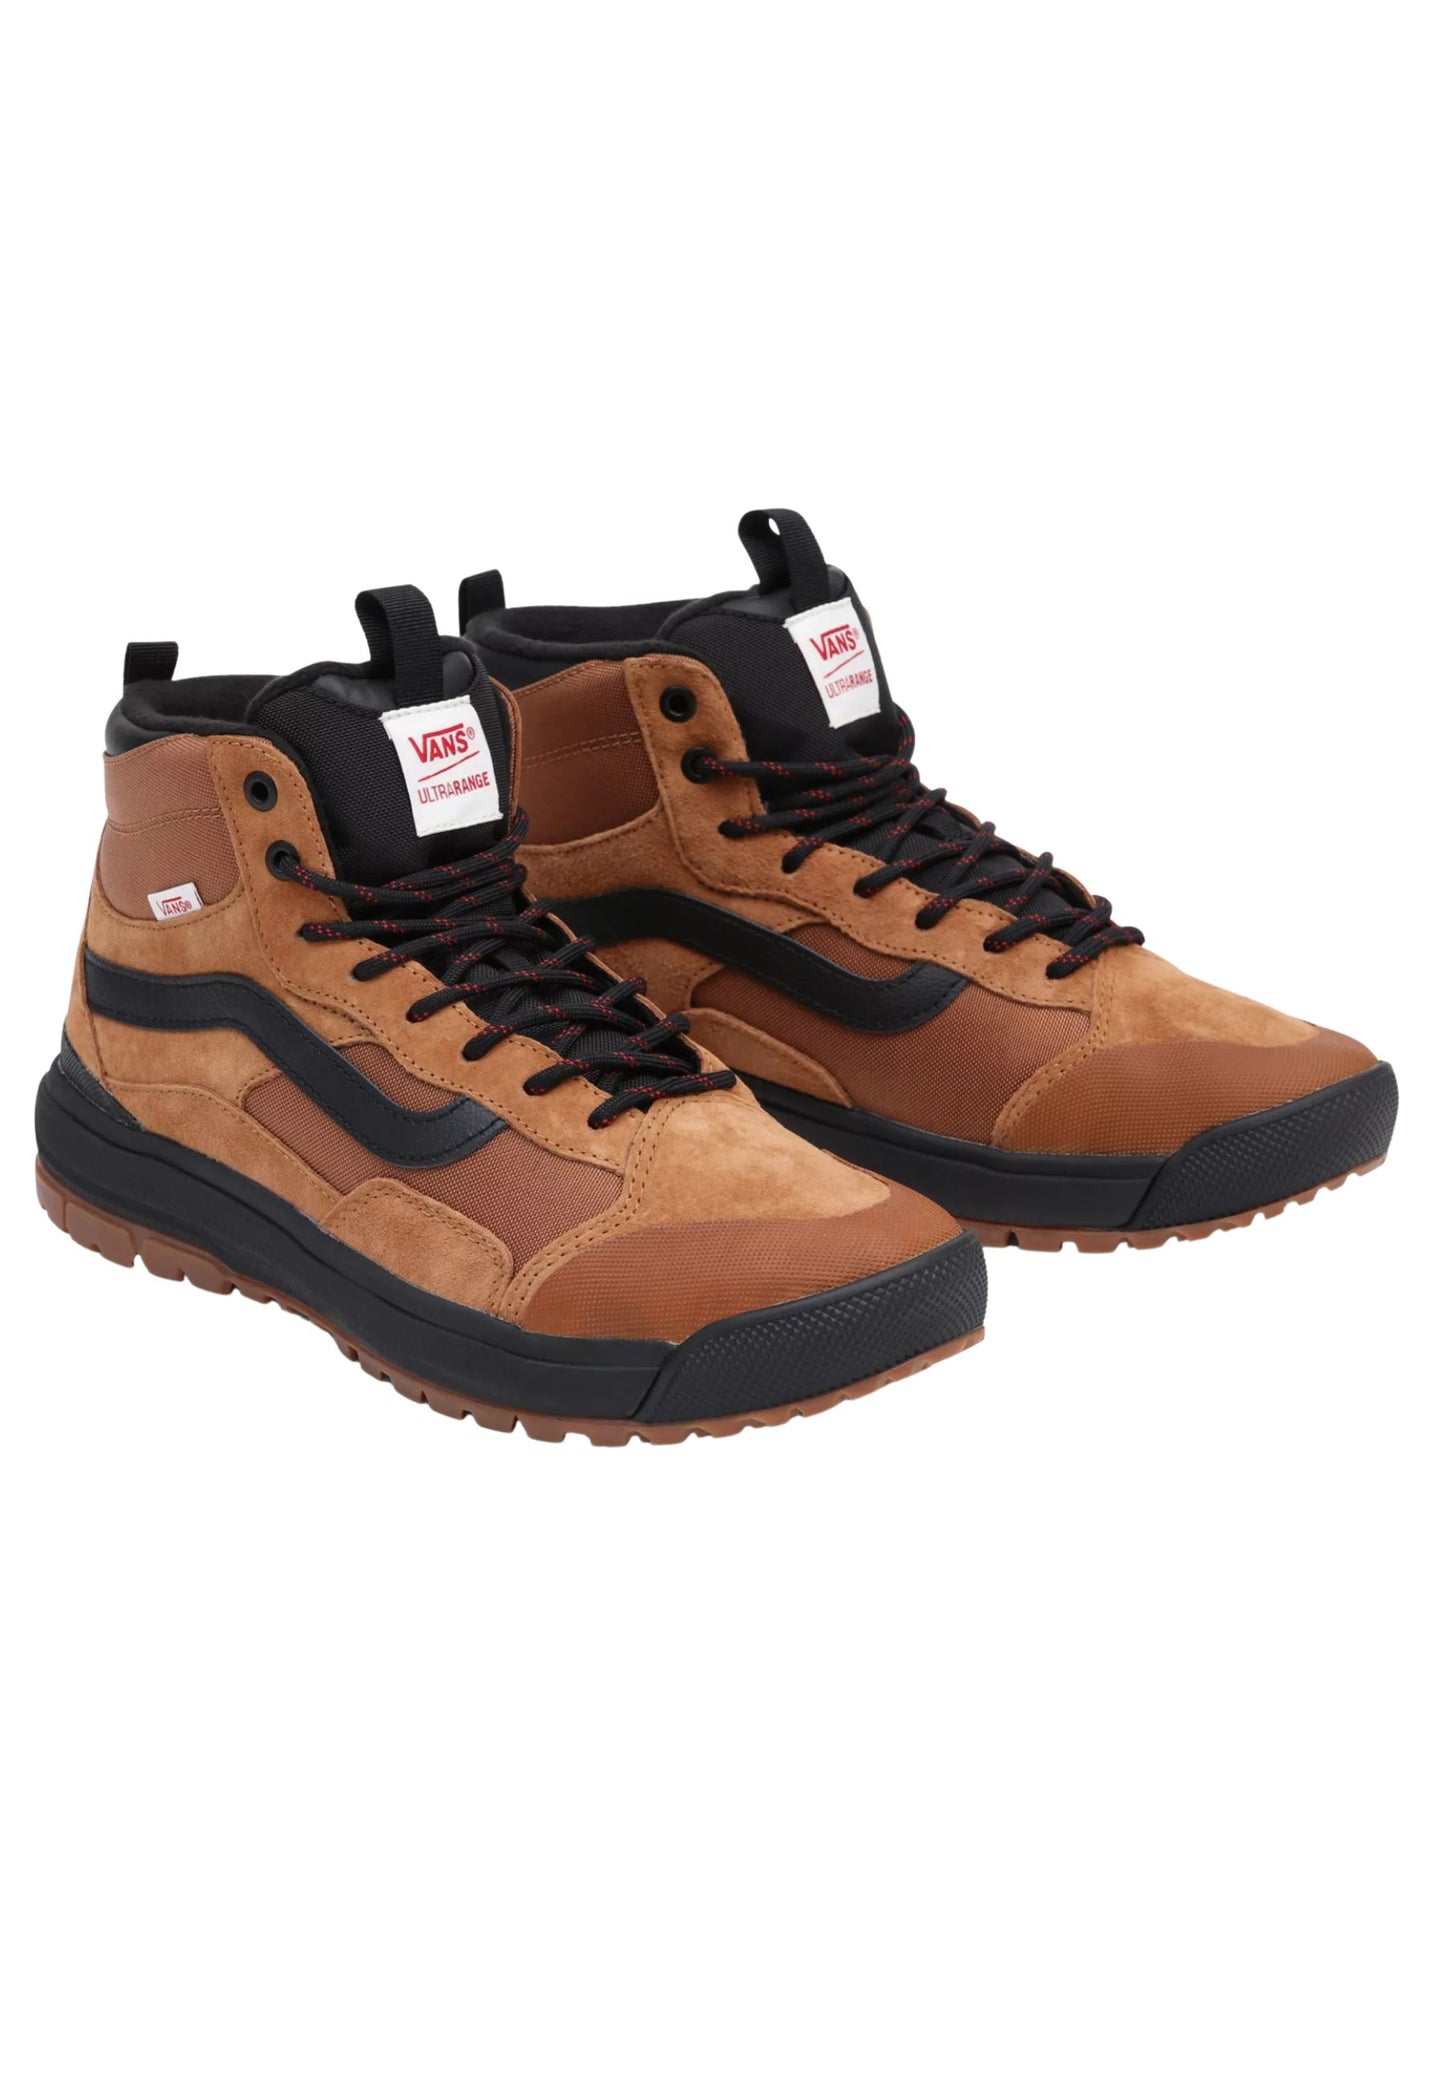 Vans Ultrarange Exo brown mountain leather boot